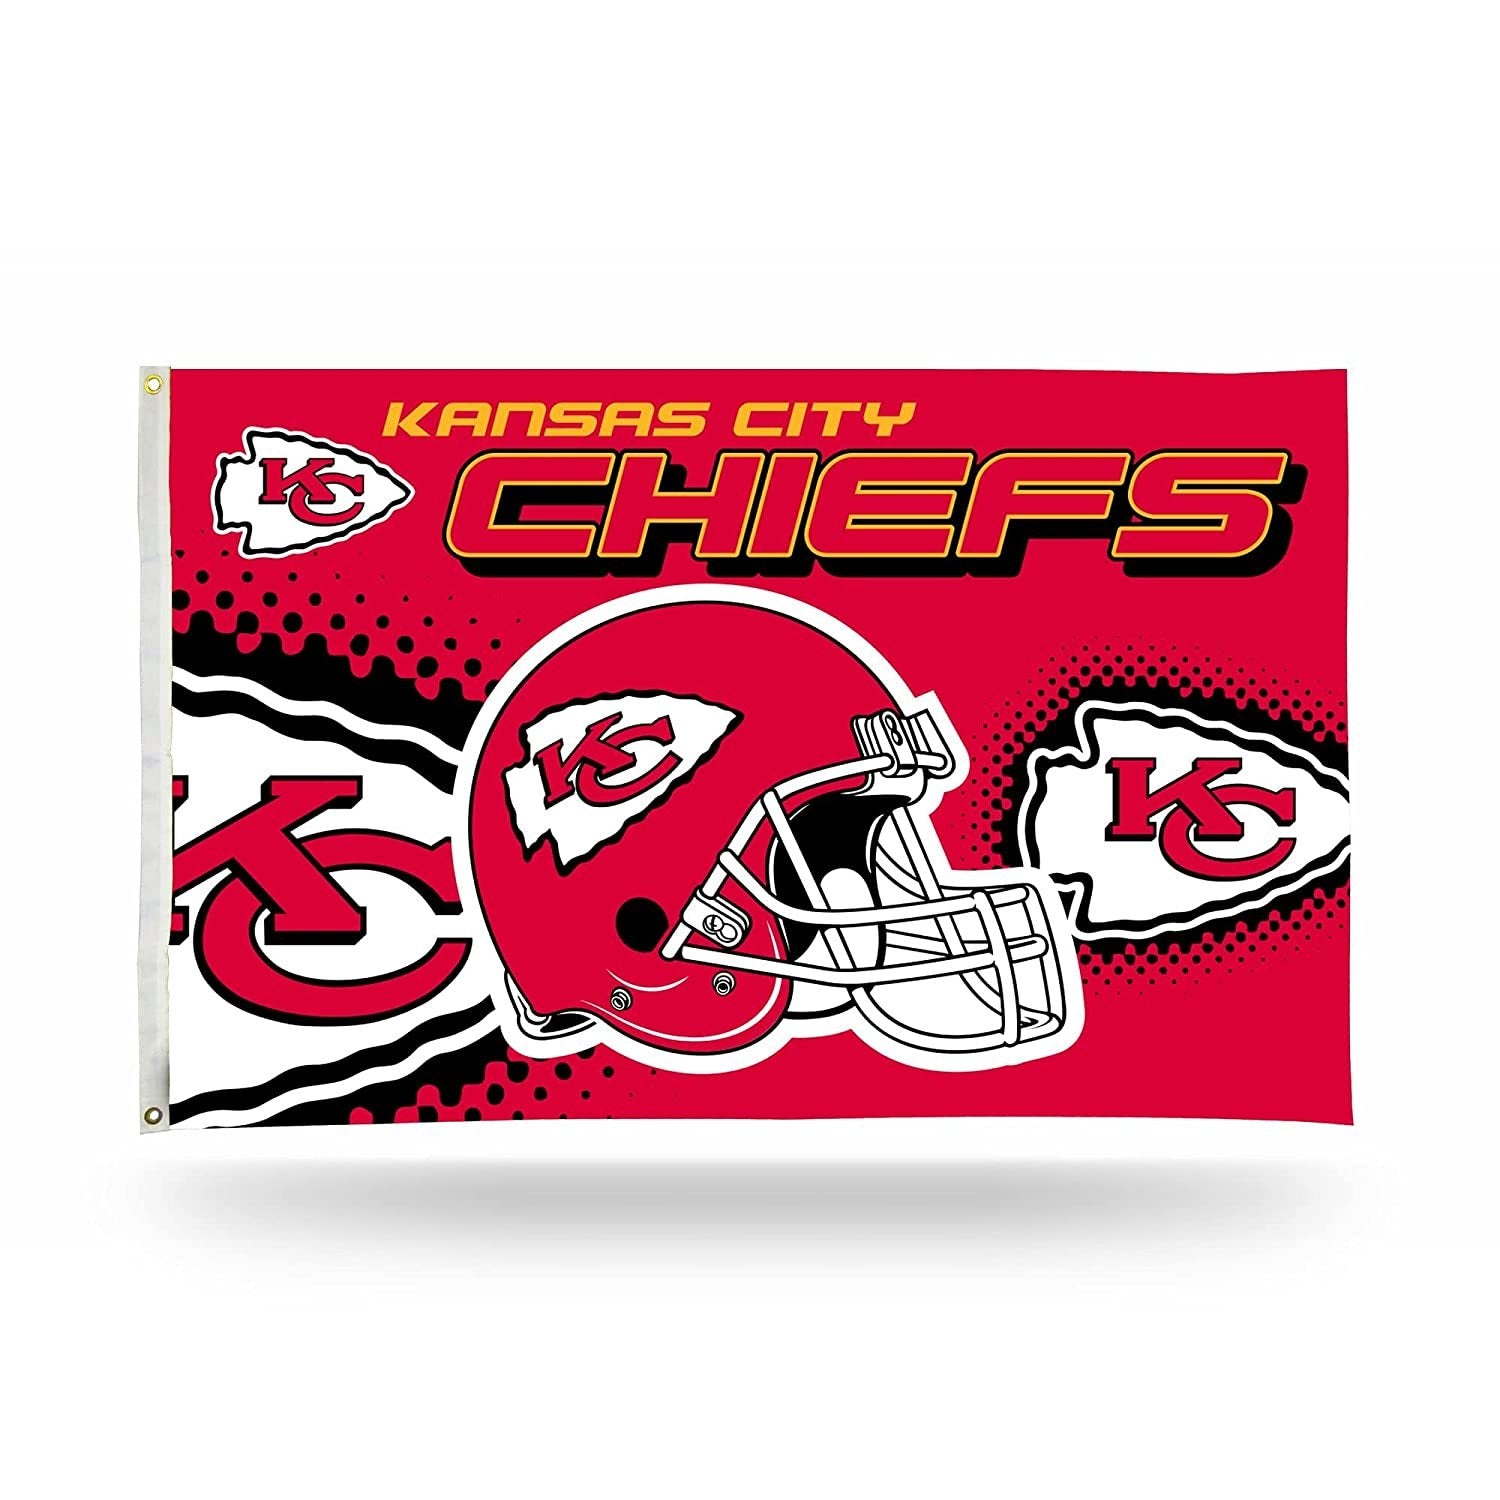 Kansas City Chiefs Premium 3x5 Feet Flag Banner, Helmet Design, Metal Grommets, Outdoor Use, Single Sided